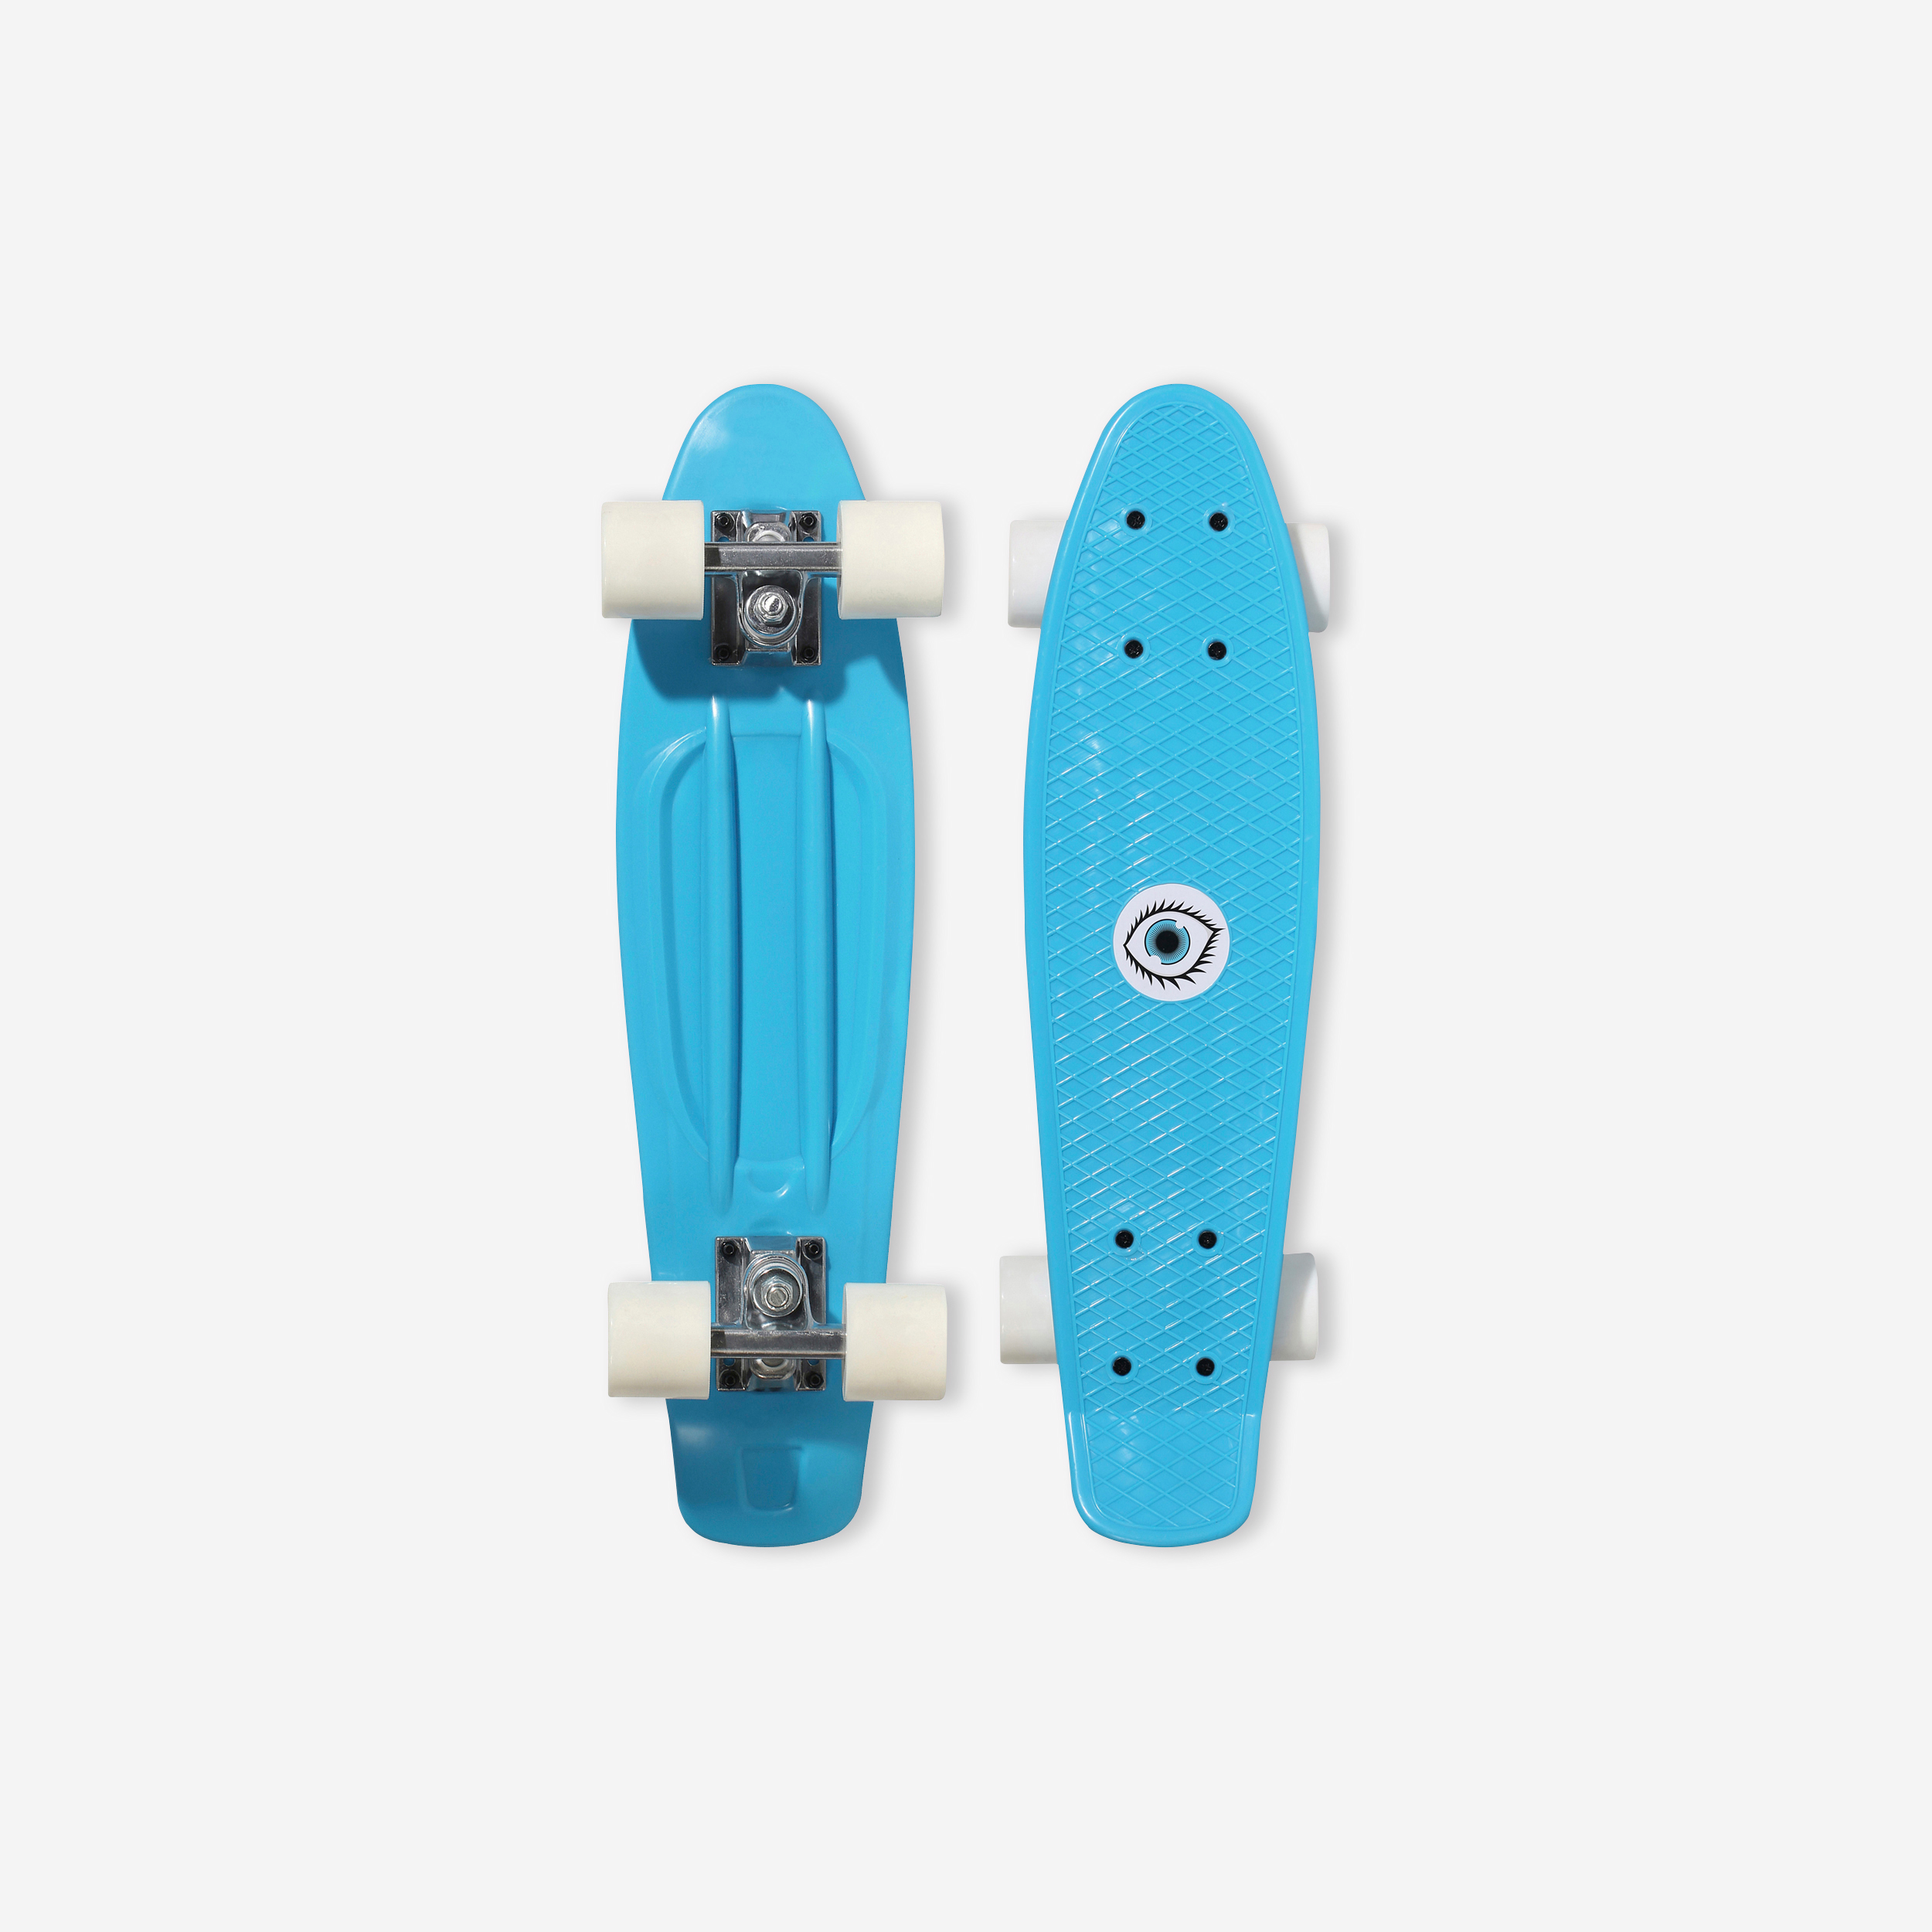 ② SKATEWIZ Kit de protection skateboard pour enfants — Skateboard